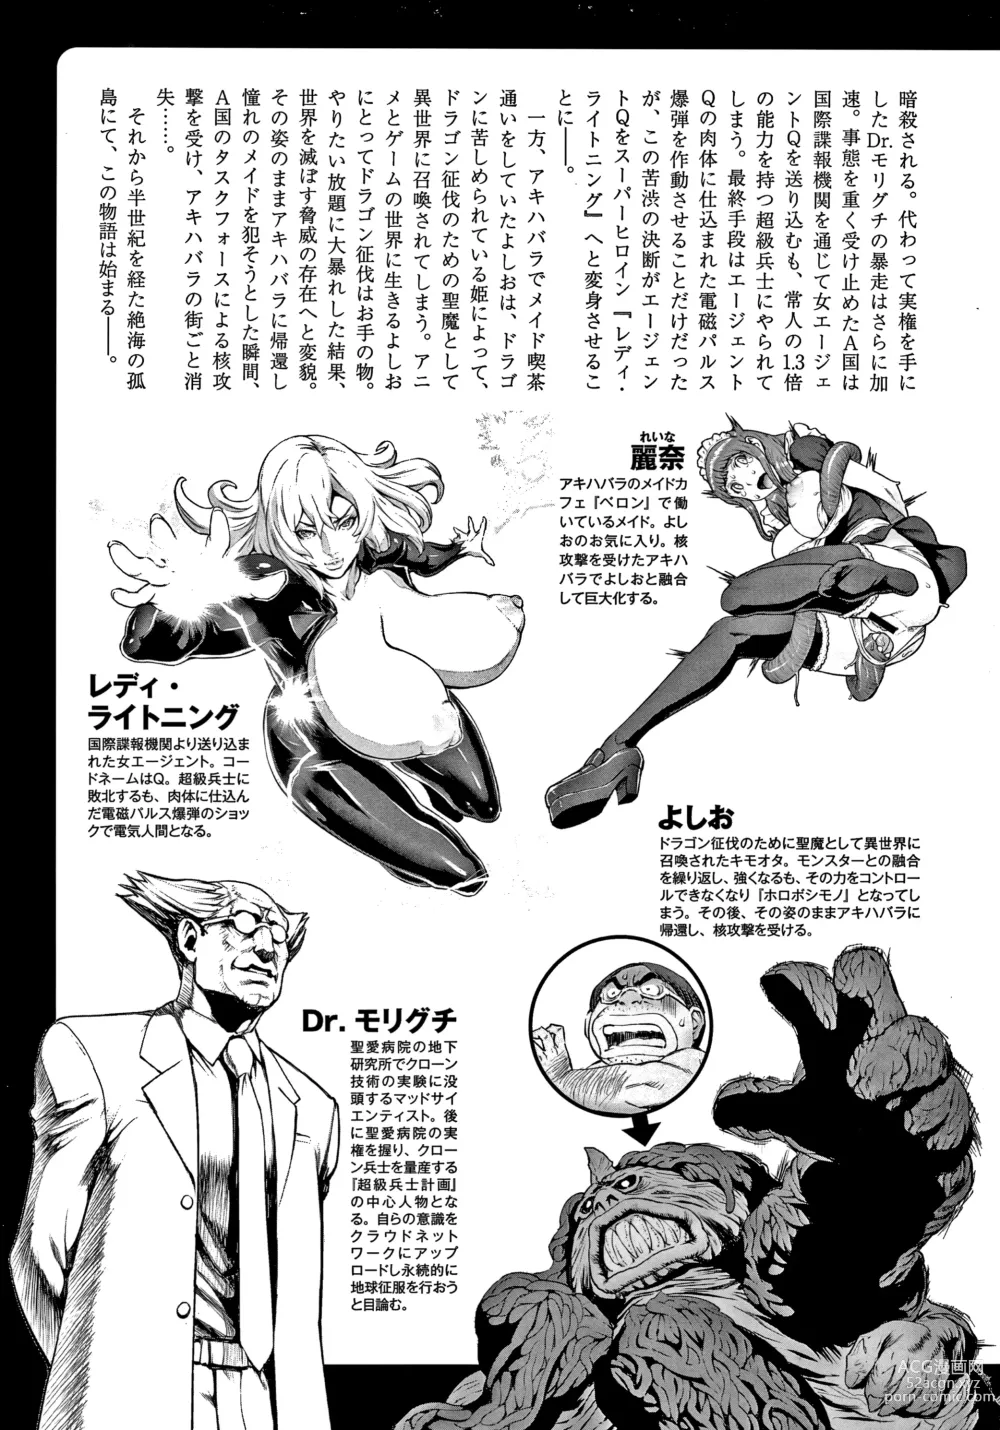 Page 7 of manga Haramase no Hoshi